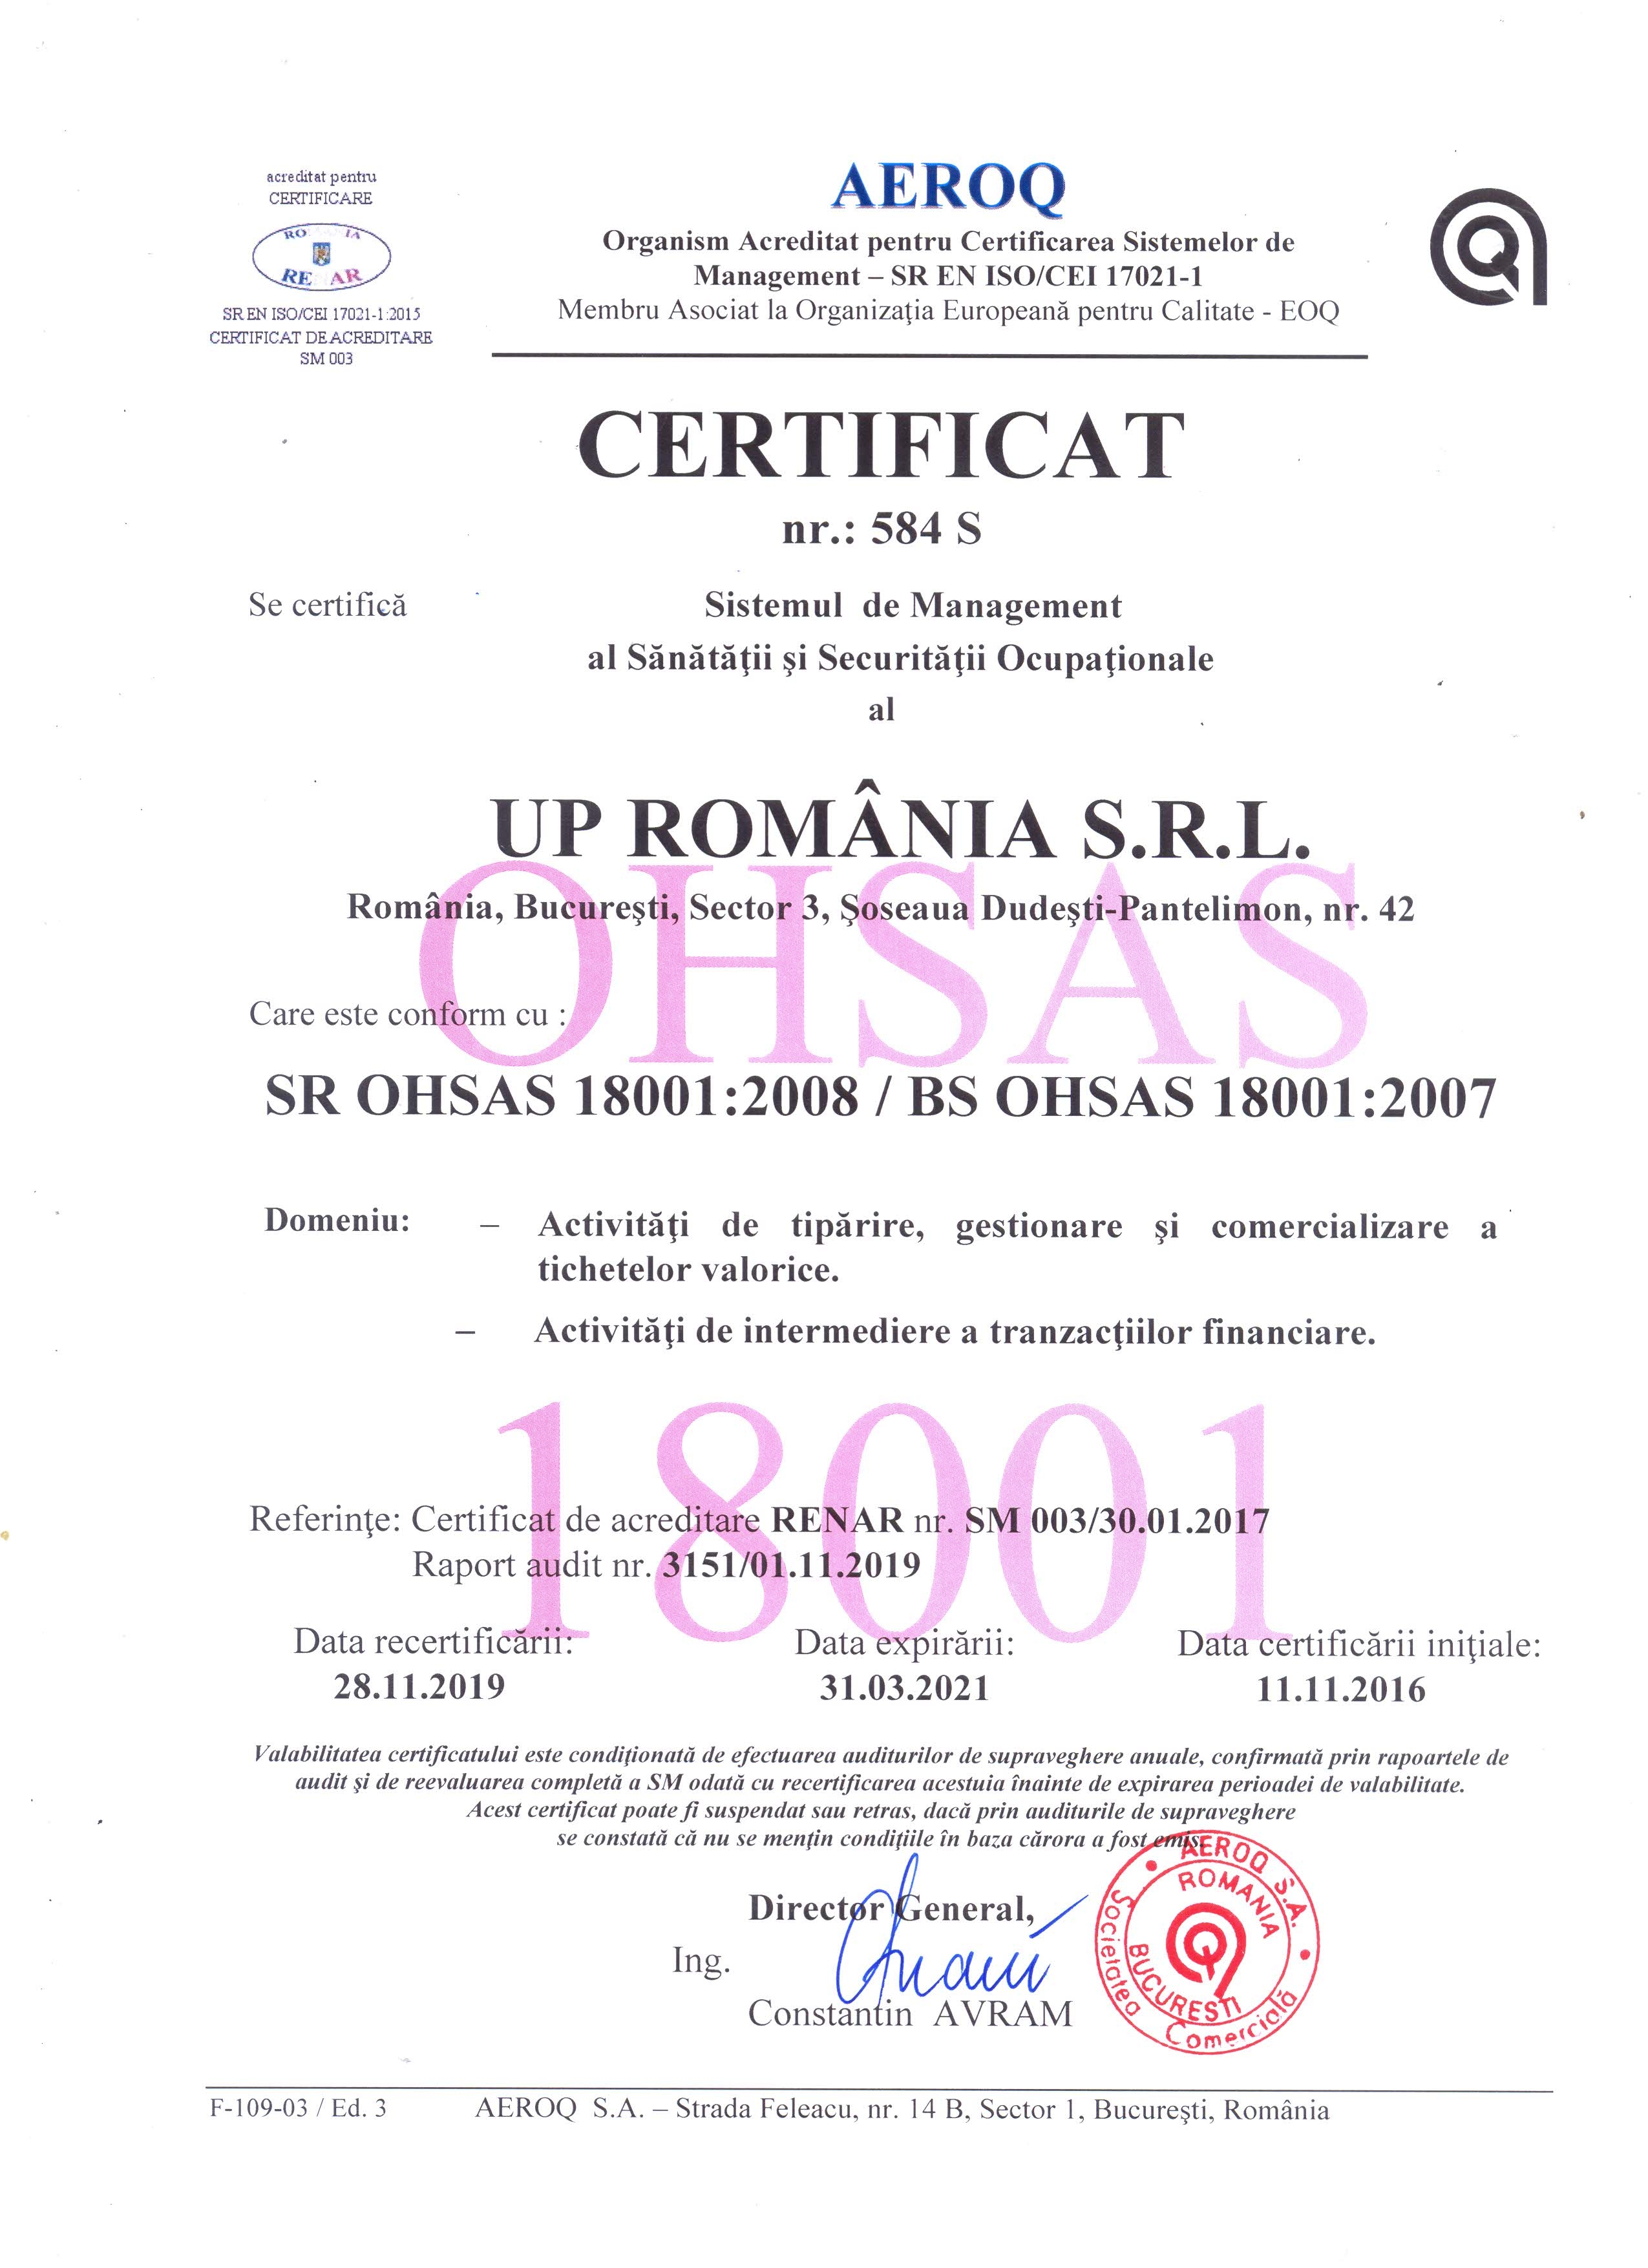 Vouchere De Vacanta Tichete De Vacanta Institutii Publice Up Romania